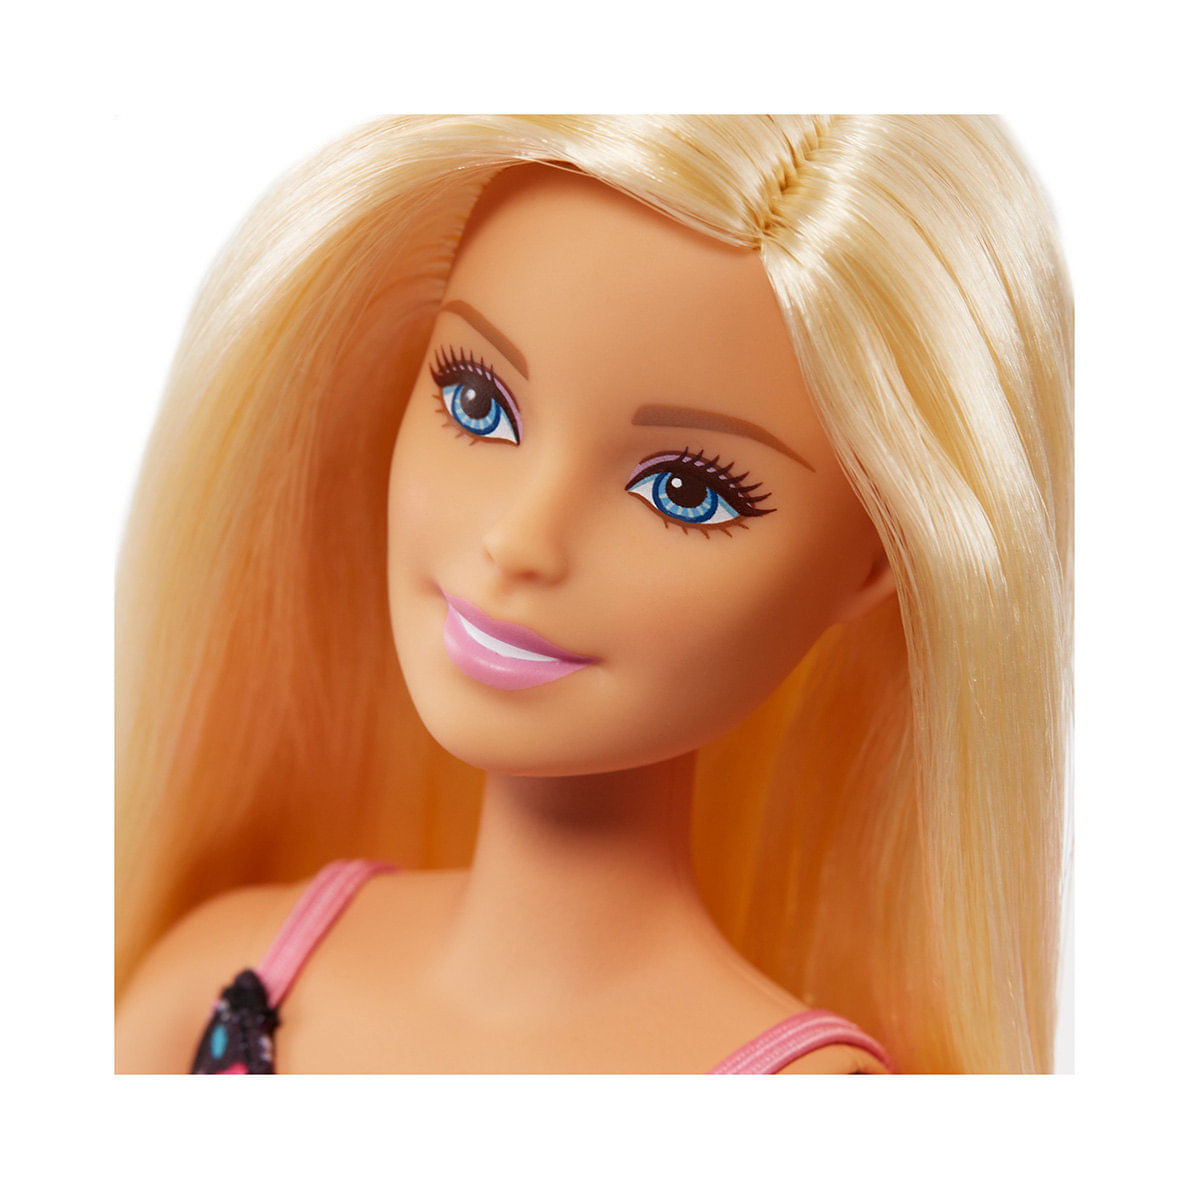 6131700_Barbie-Estate-Supermercado-da-Barbie-Mattel_6_Zoom